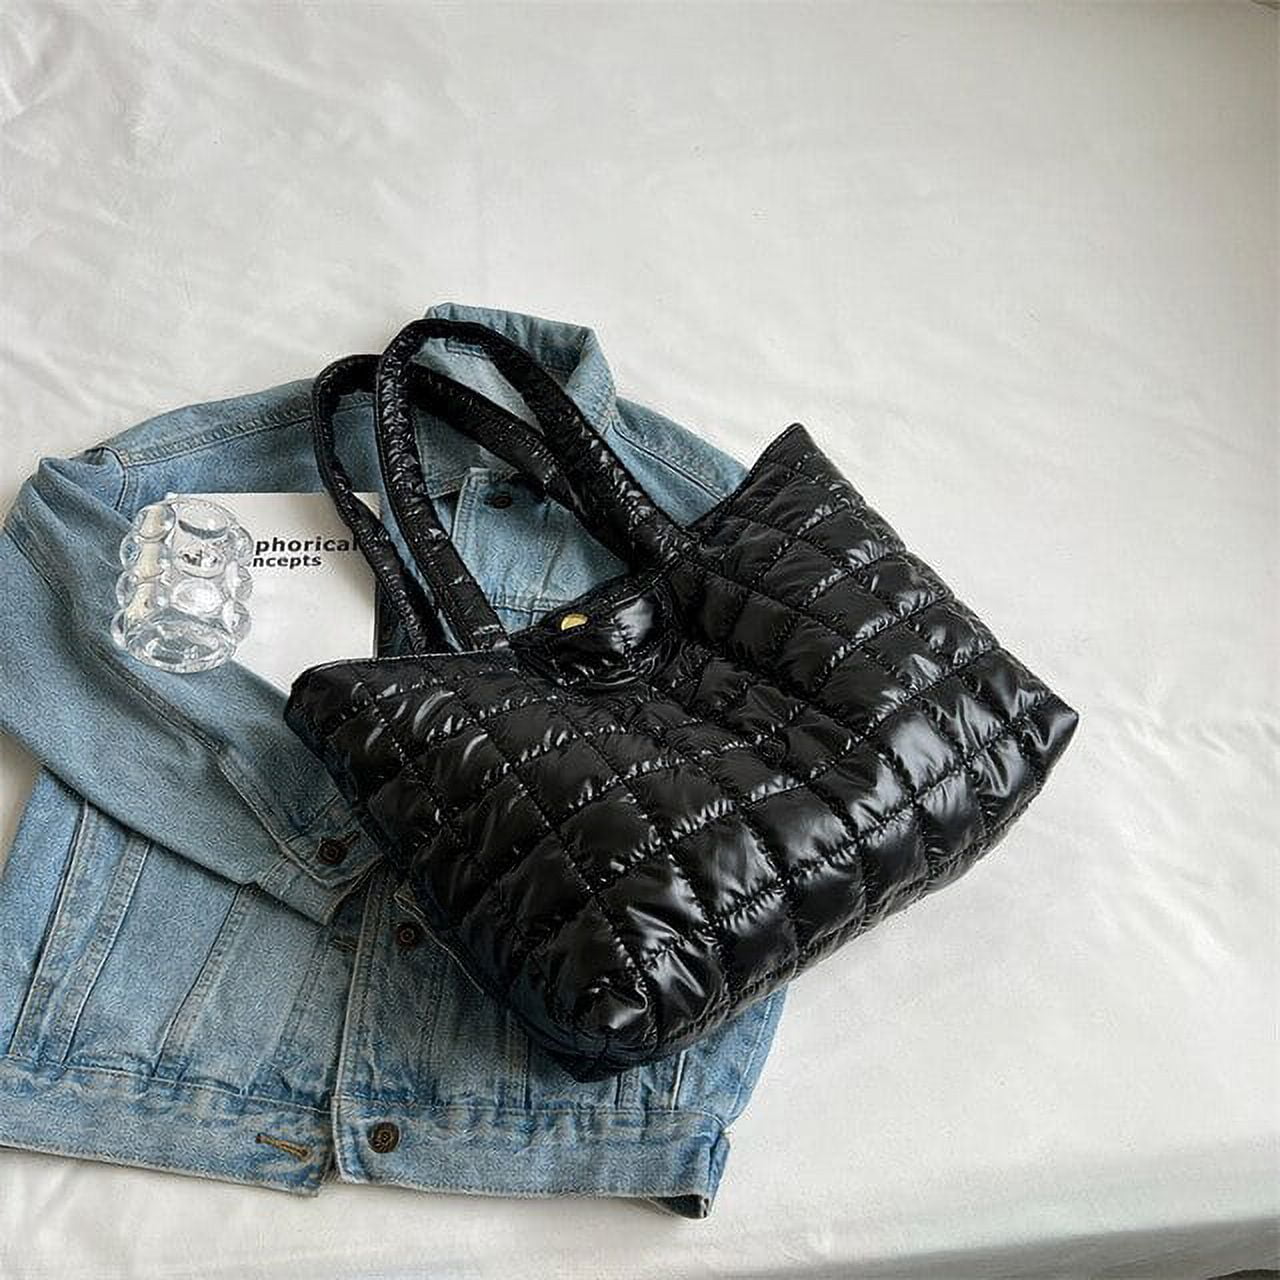 Chanel Choupette Tote Bag Gray/Navy A69928 Nylon